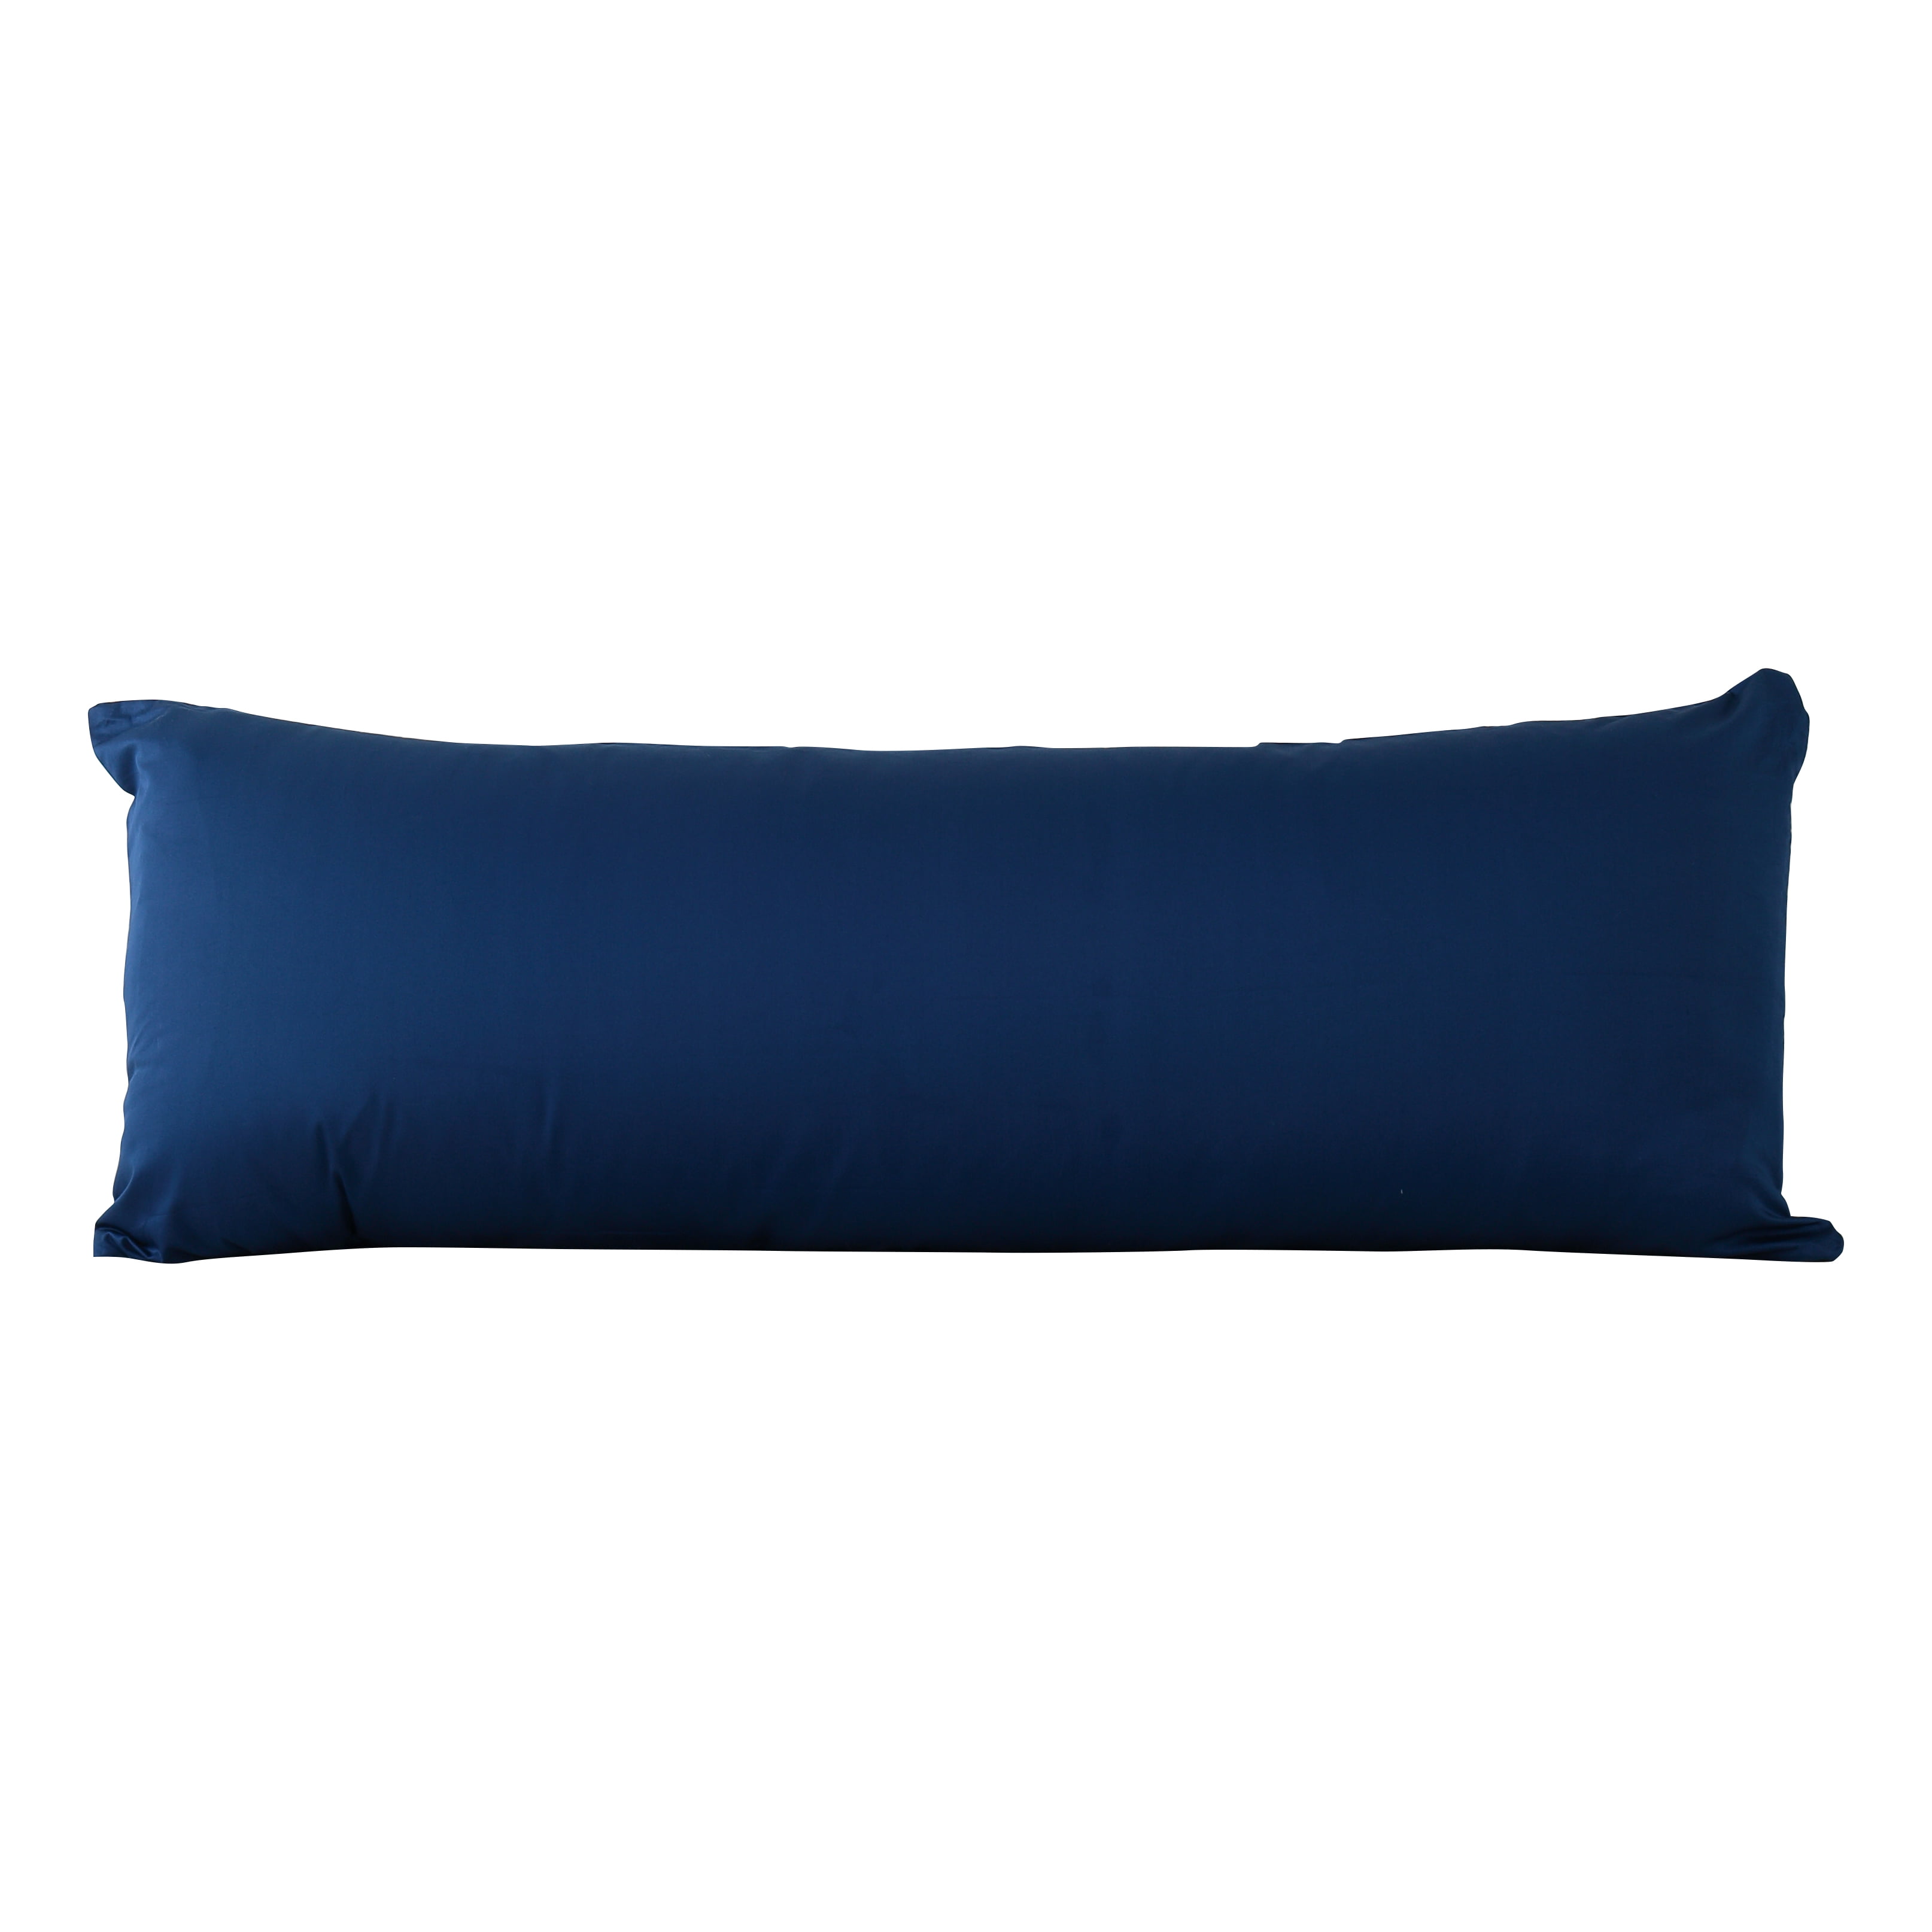 20"x 54" DOUBLE SIDE ZIPPER Microsuede Body Pillow Cover Pillowcase NAVY BLUE 